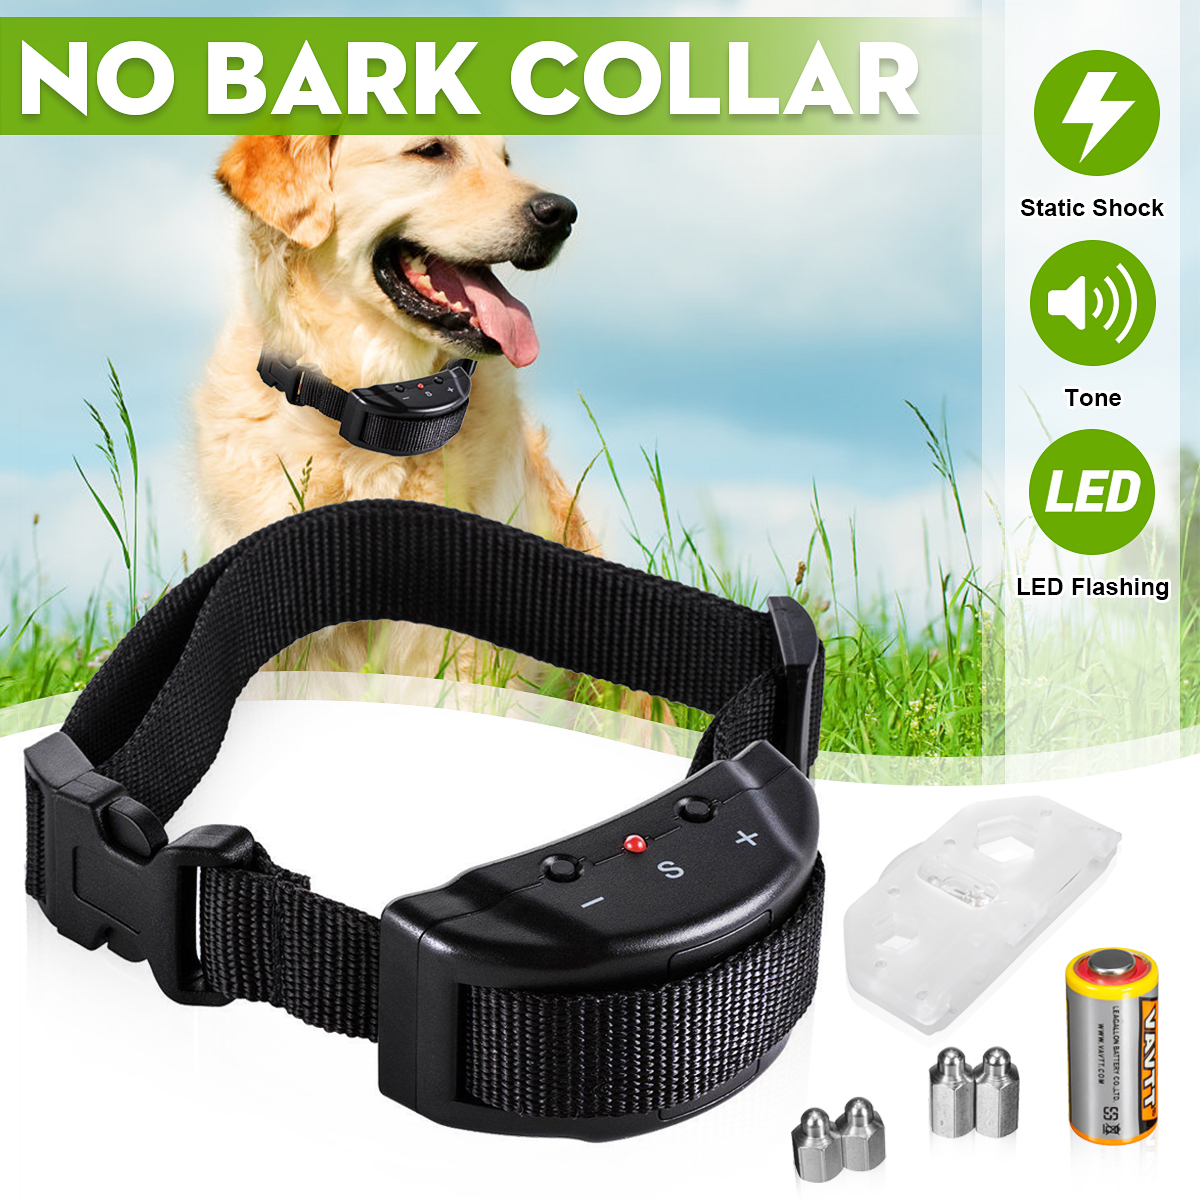 Anti-Bark-No-Barking-Remote-Electric-Shock-Vibration-Dog-Pet-Training-Collar-Puppy-Supplies-Collars--1813792-1